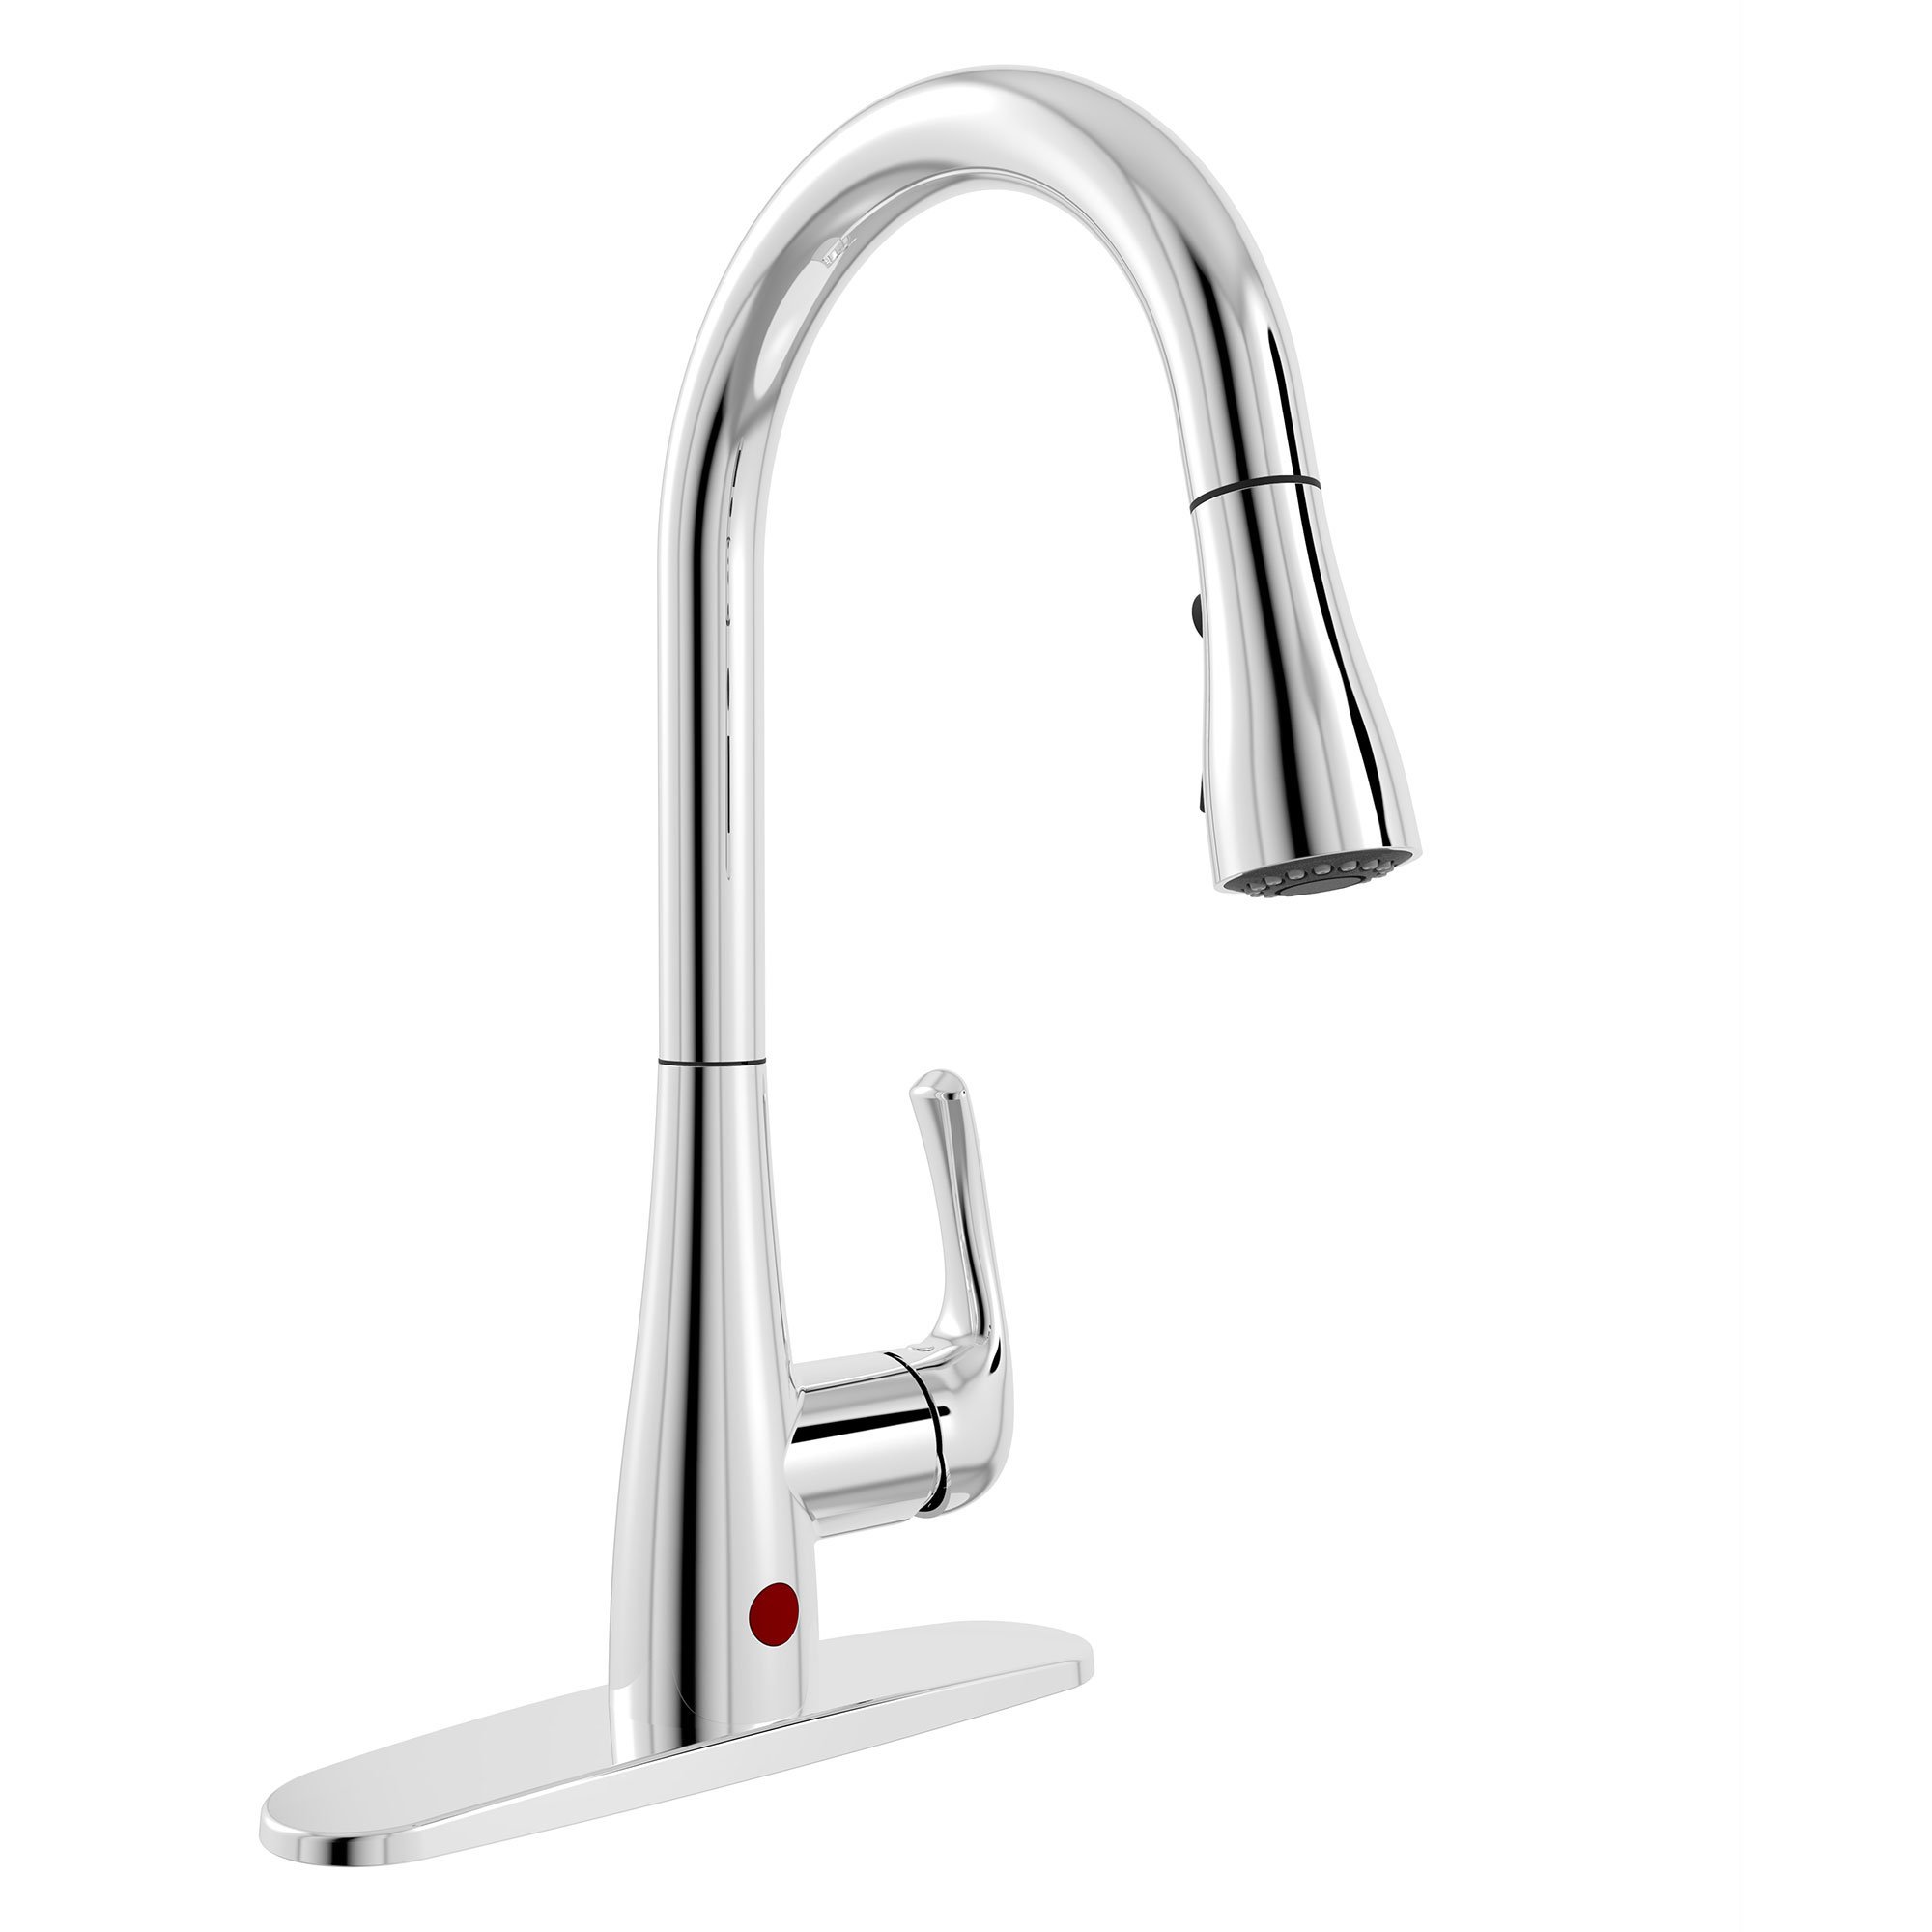 Nex76ccp Movement Sensor Kitchen Sink Faucet With Pull Down Spout & 1 Handle, Polished Chrome